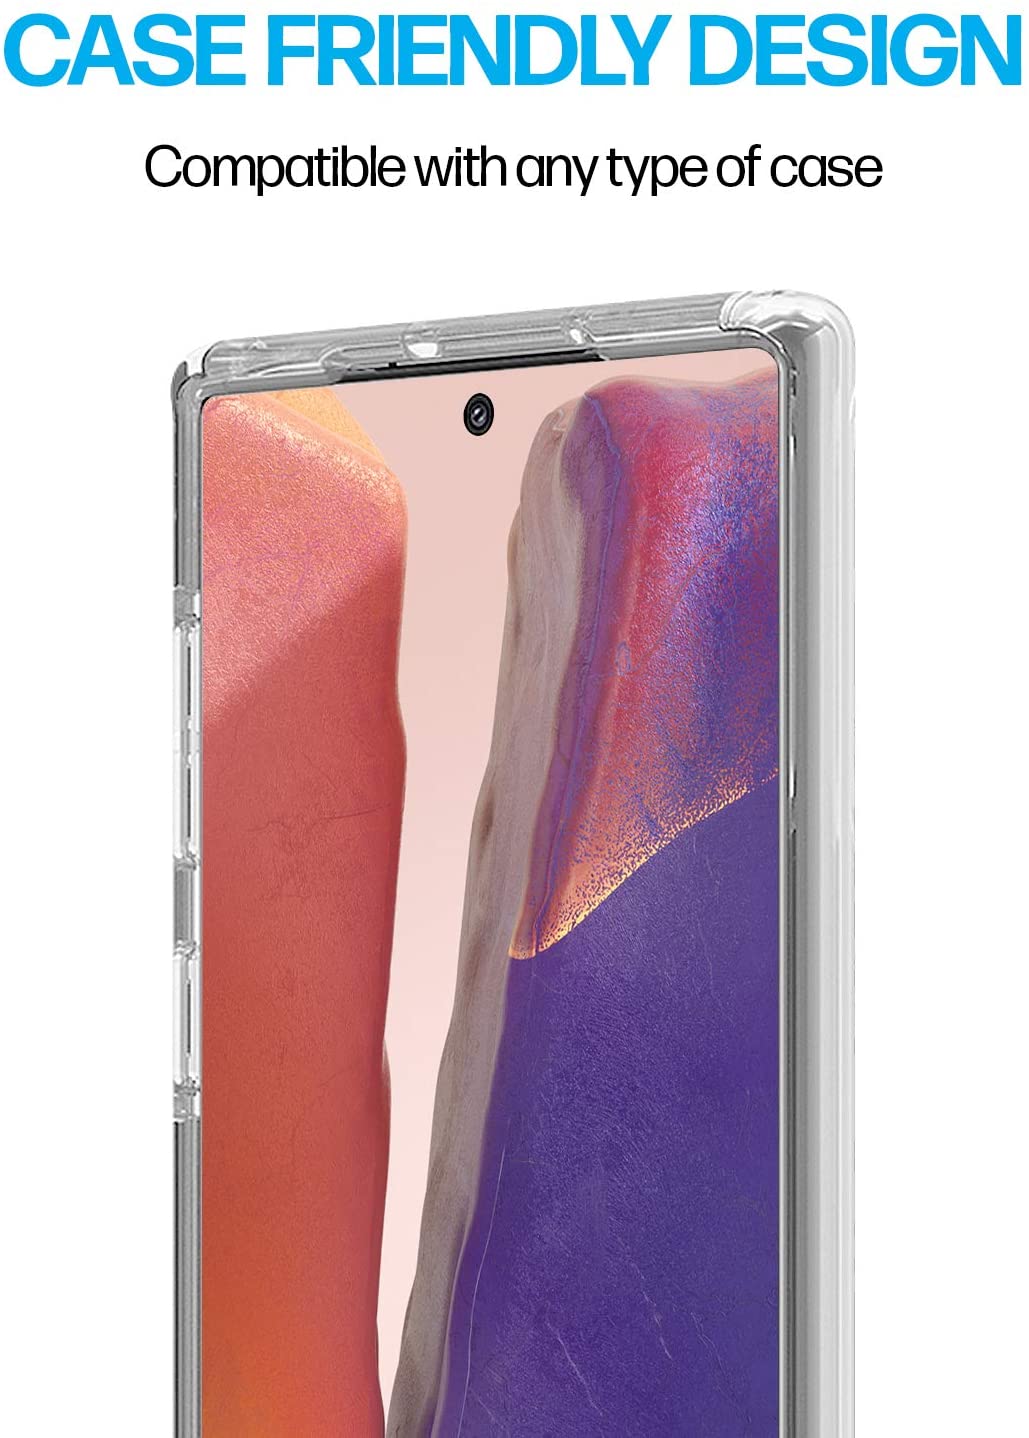 Samsung Galaxy Note 20 Anti-Scratch Screen Protector Film [2-Pack] Cover